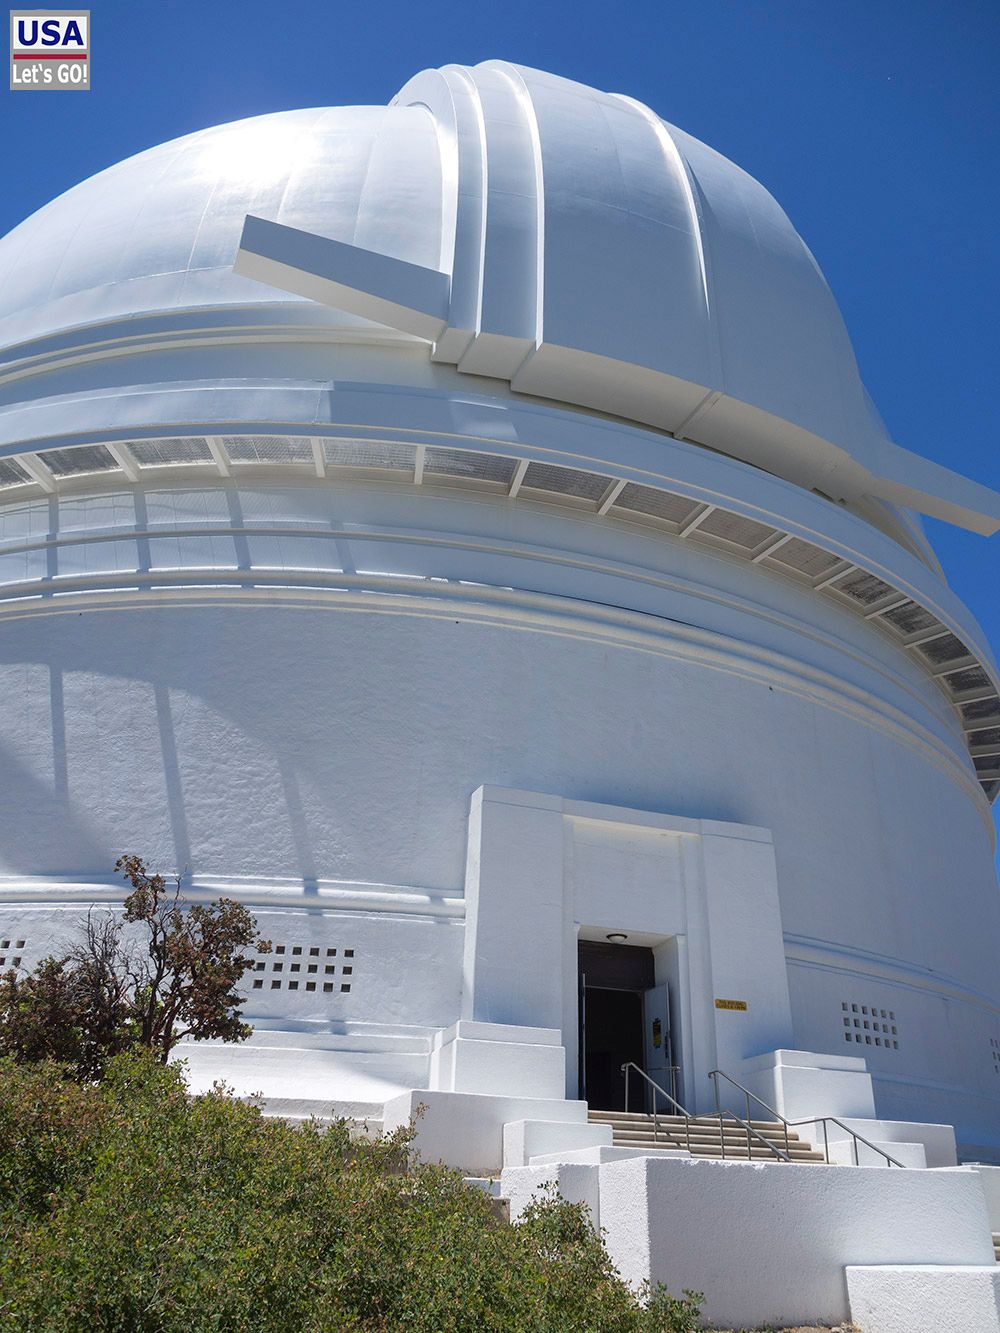 Palomr Mountain Observatory